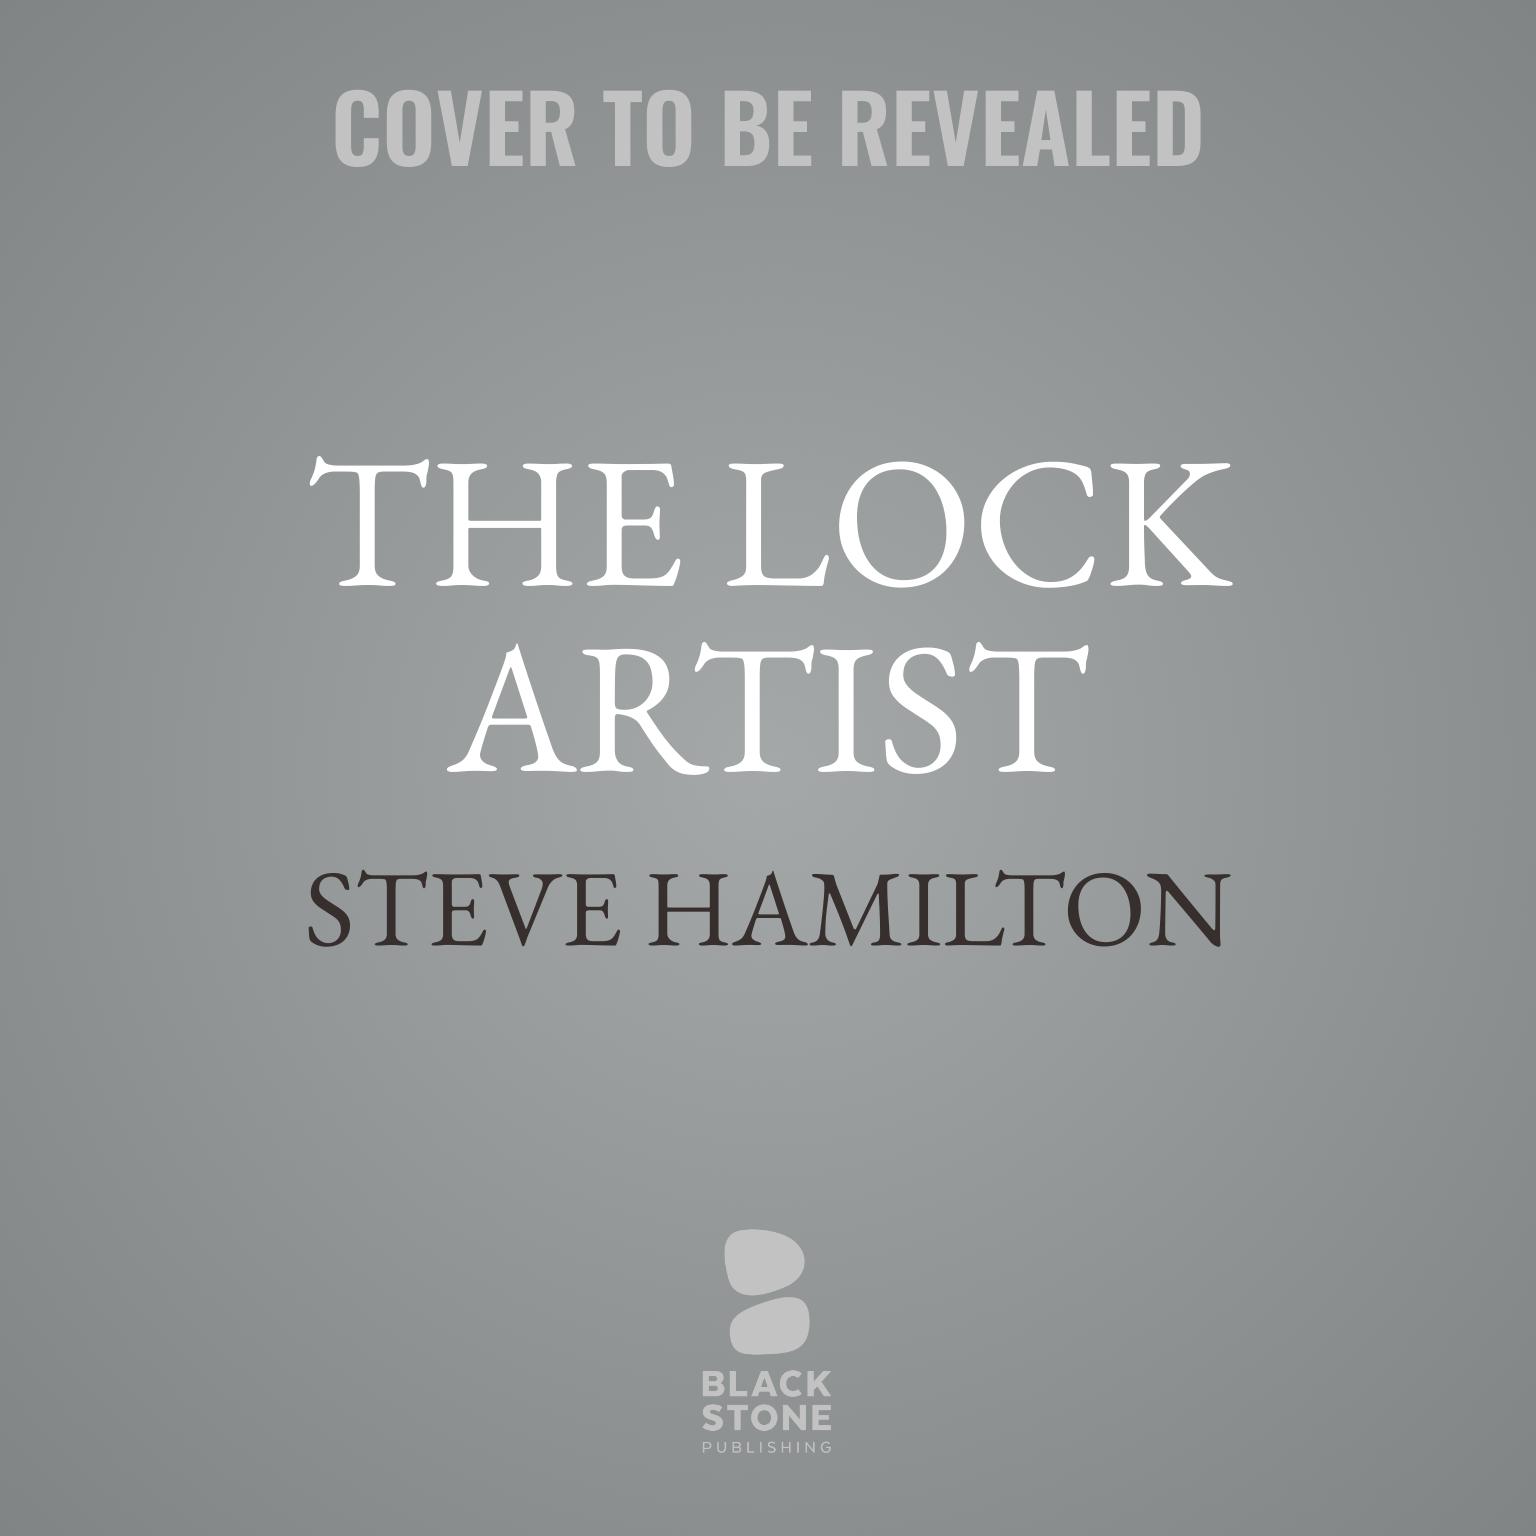 The Lock Artist Audiobook, by Steve Hamilton